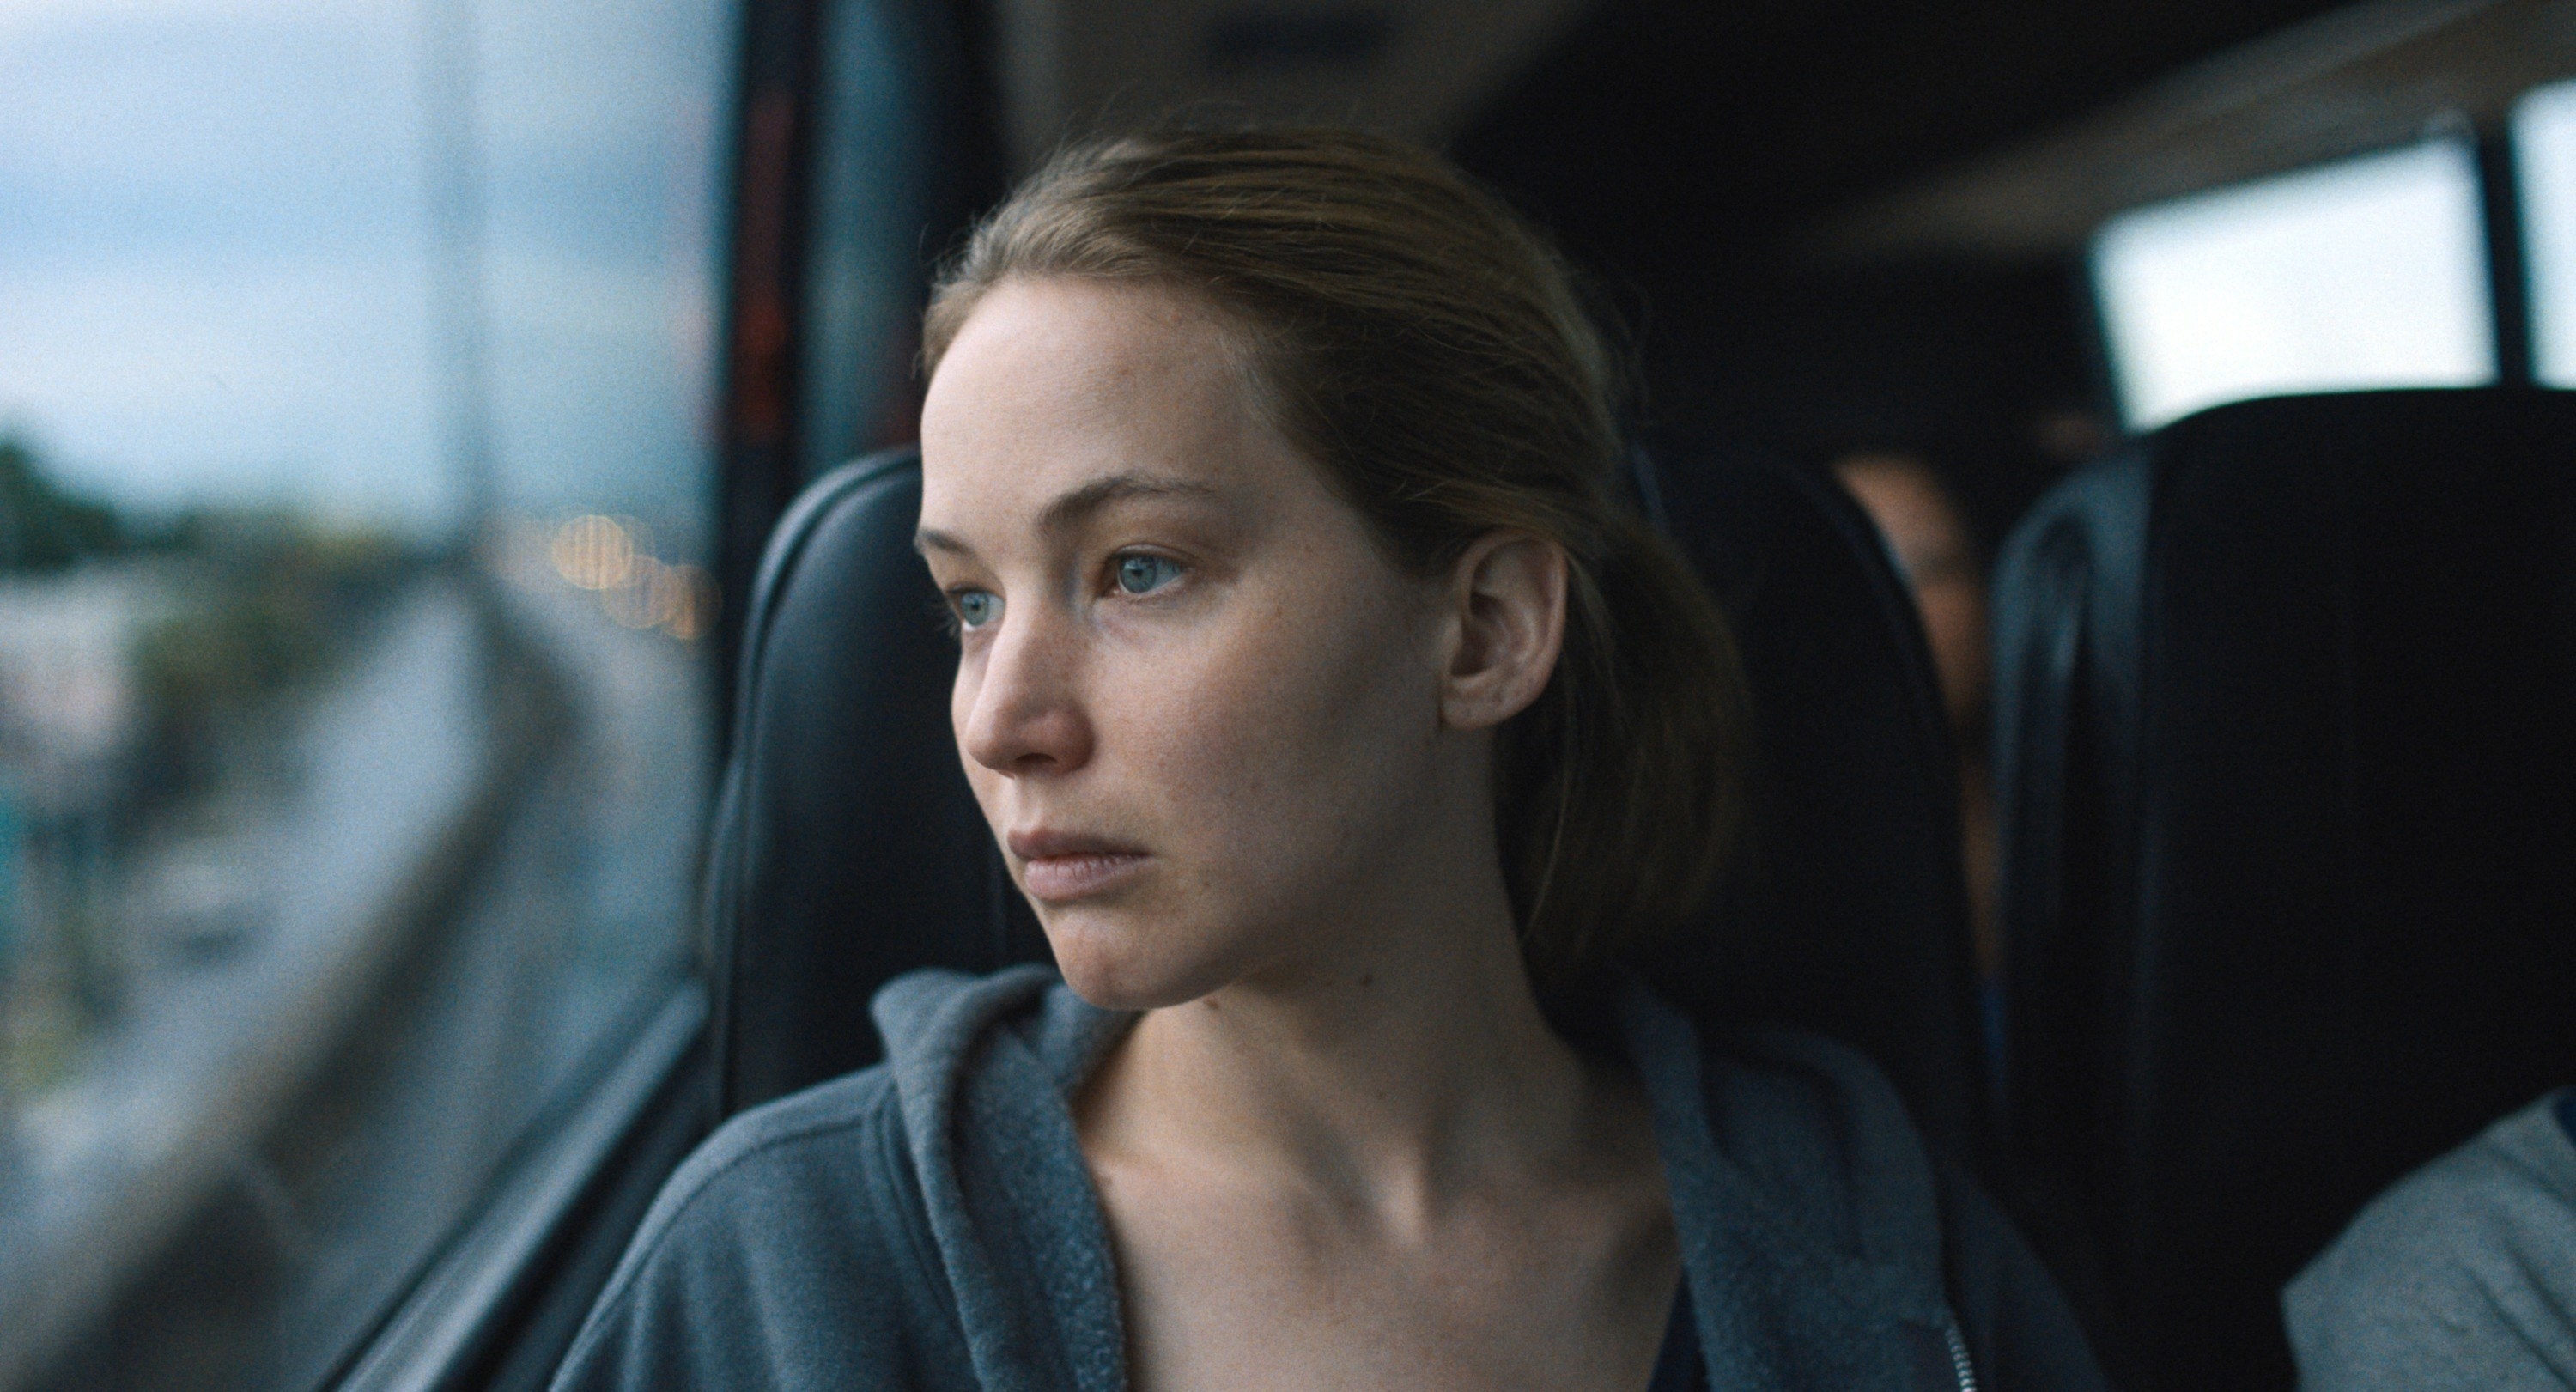 Jennifer Lawrence rides on a bus